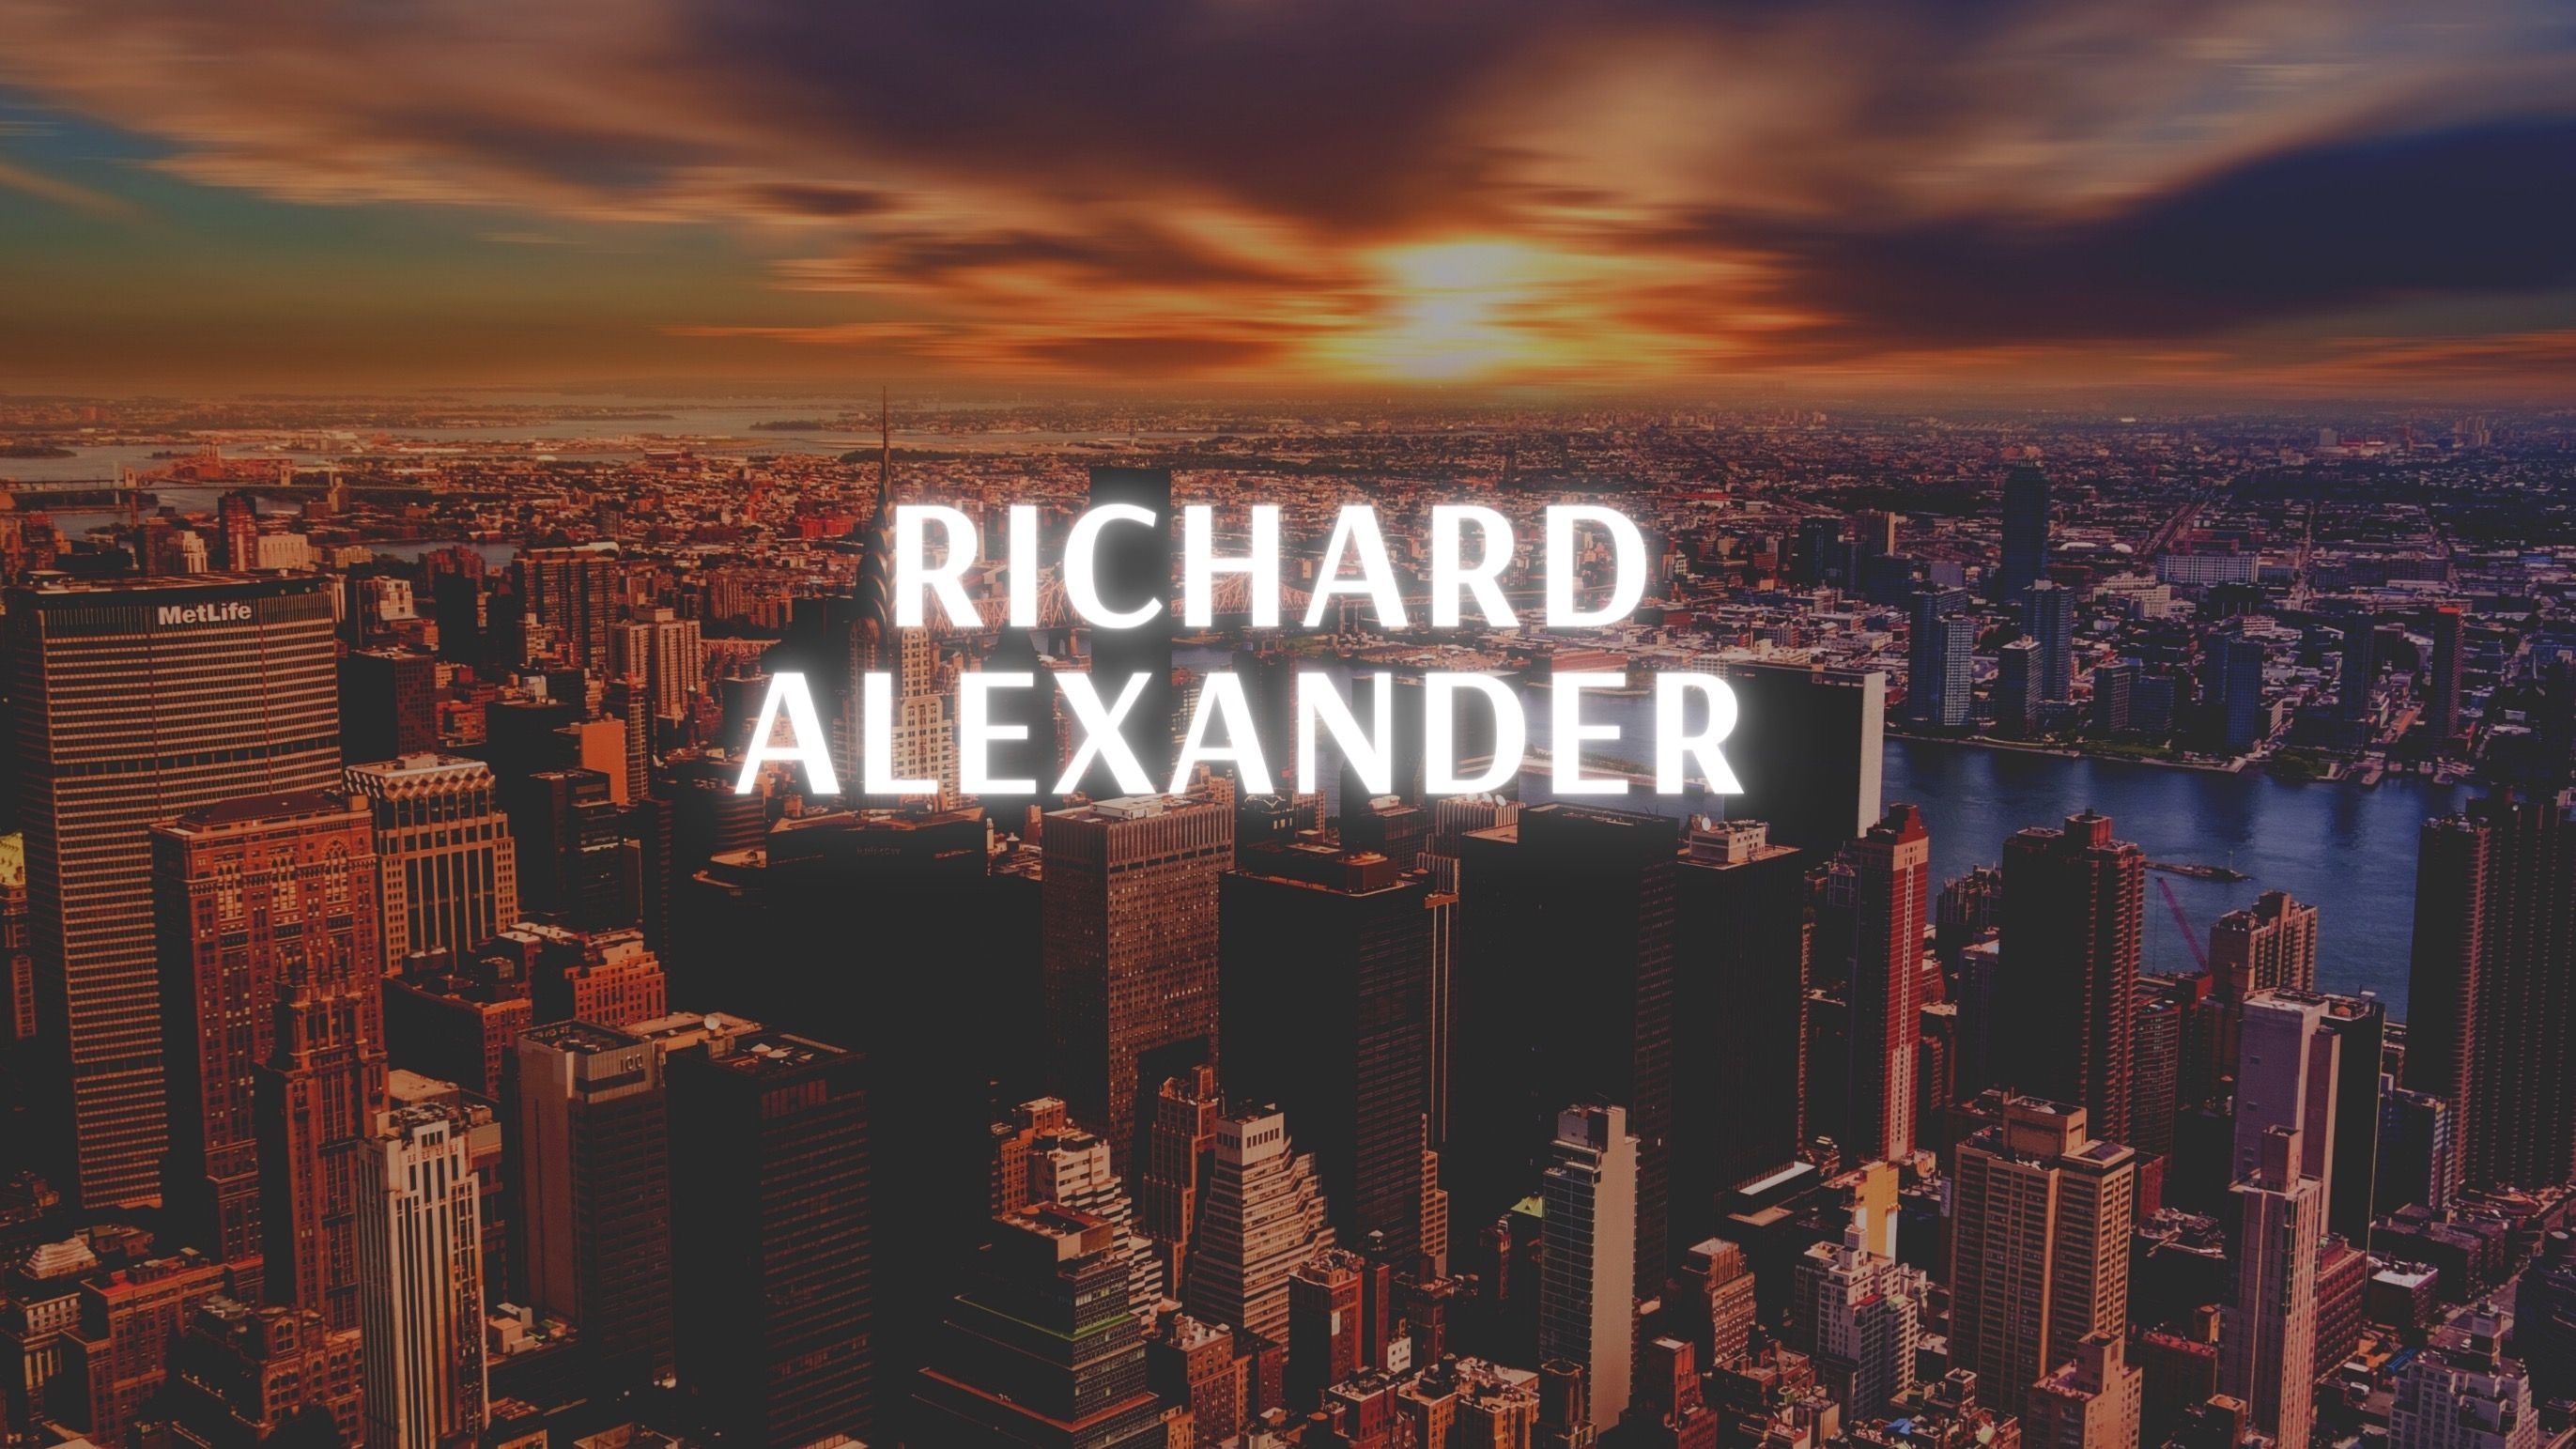 RICHARD ALEXANDER